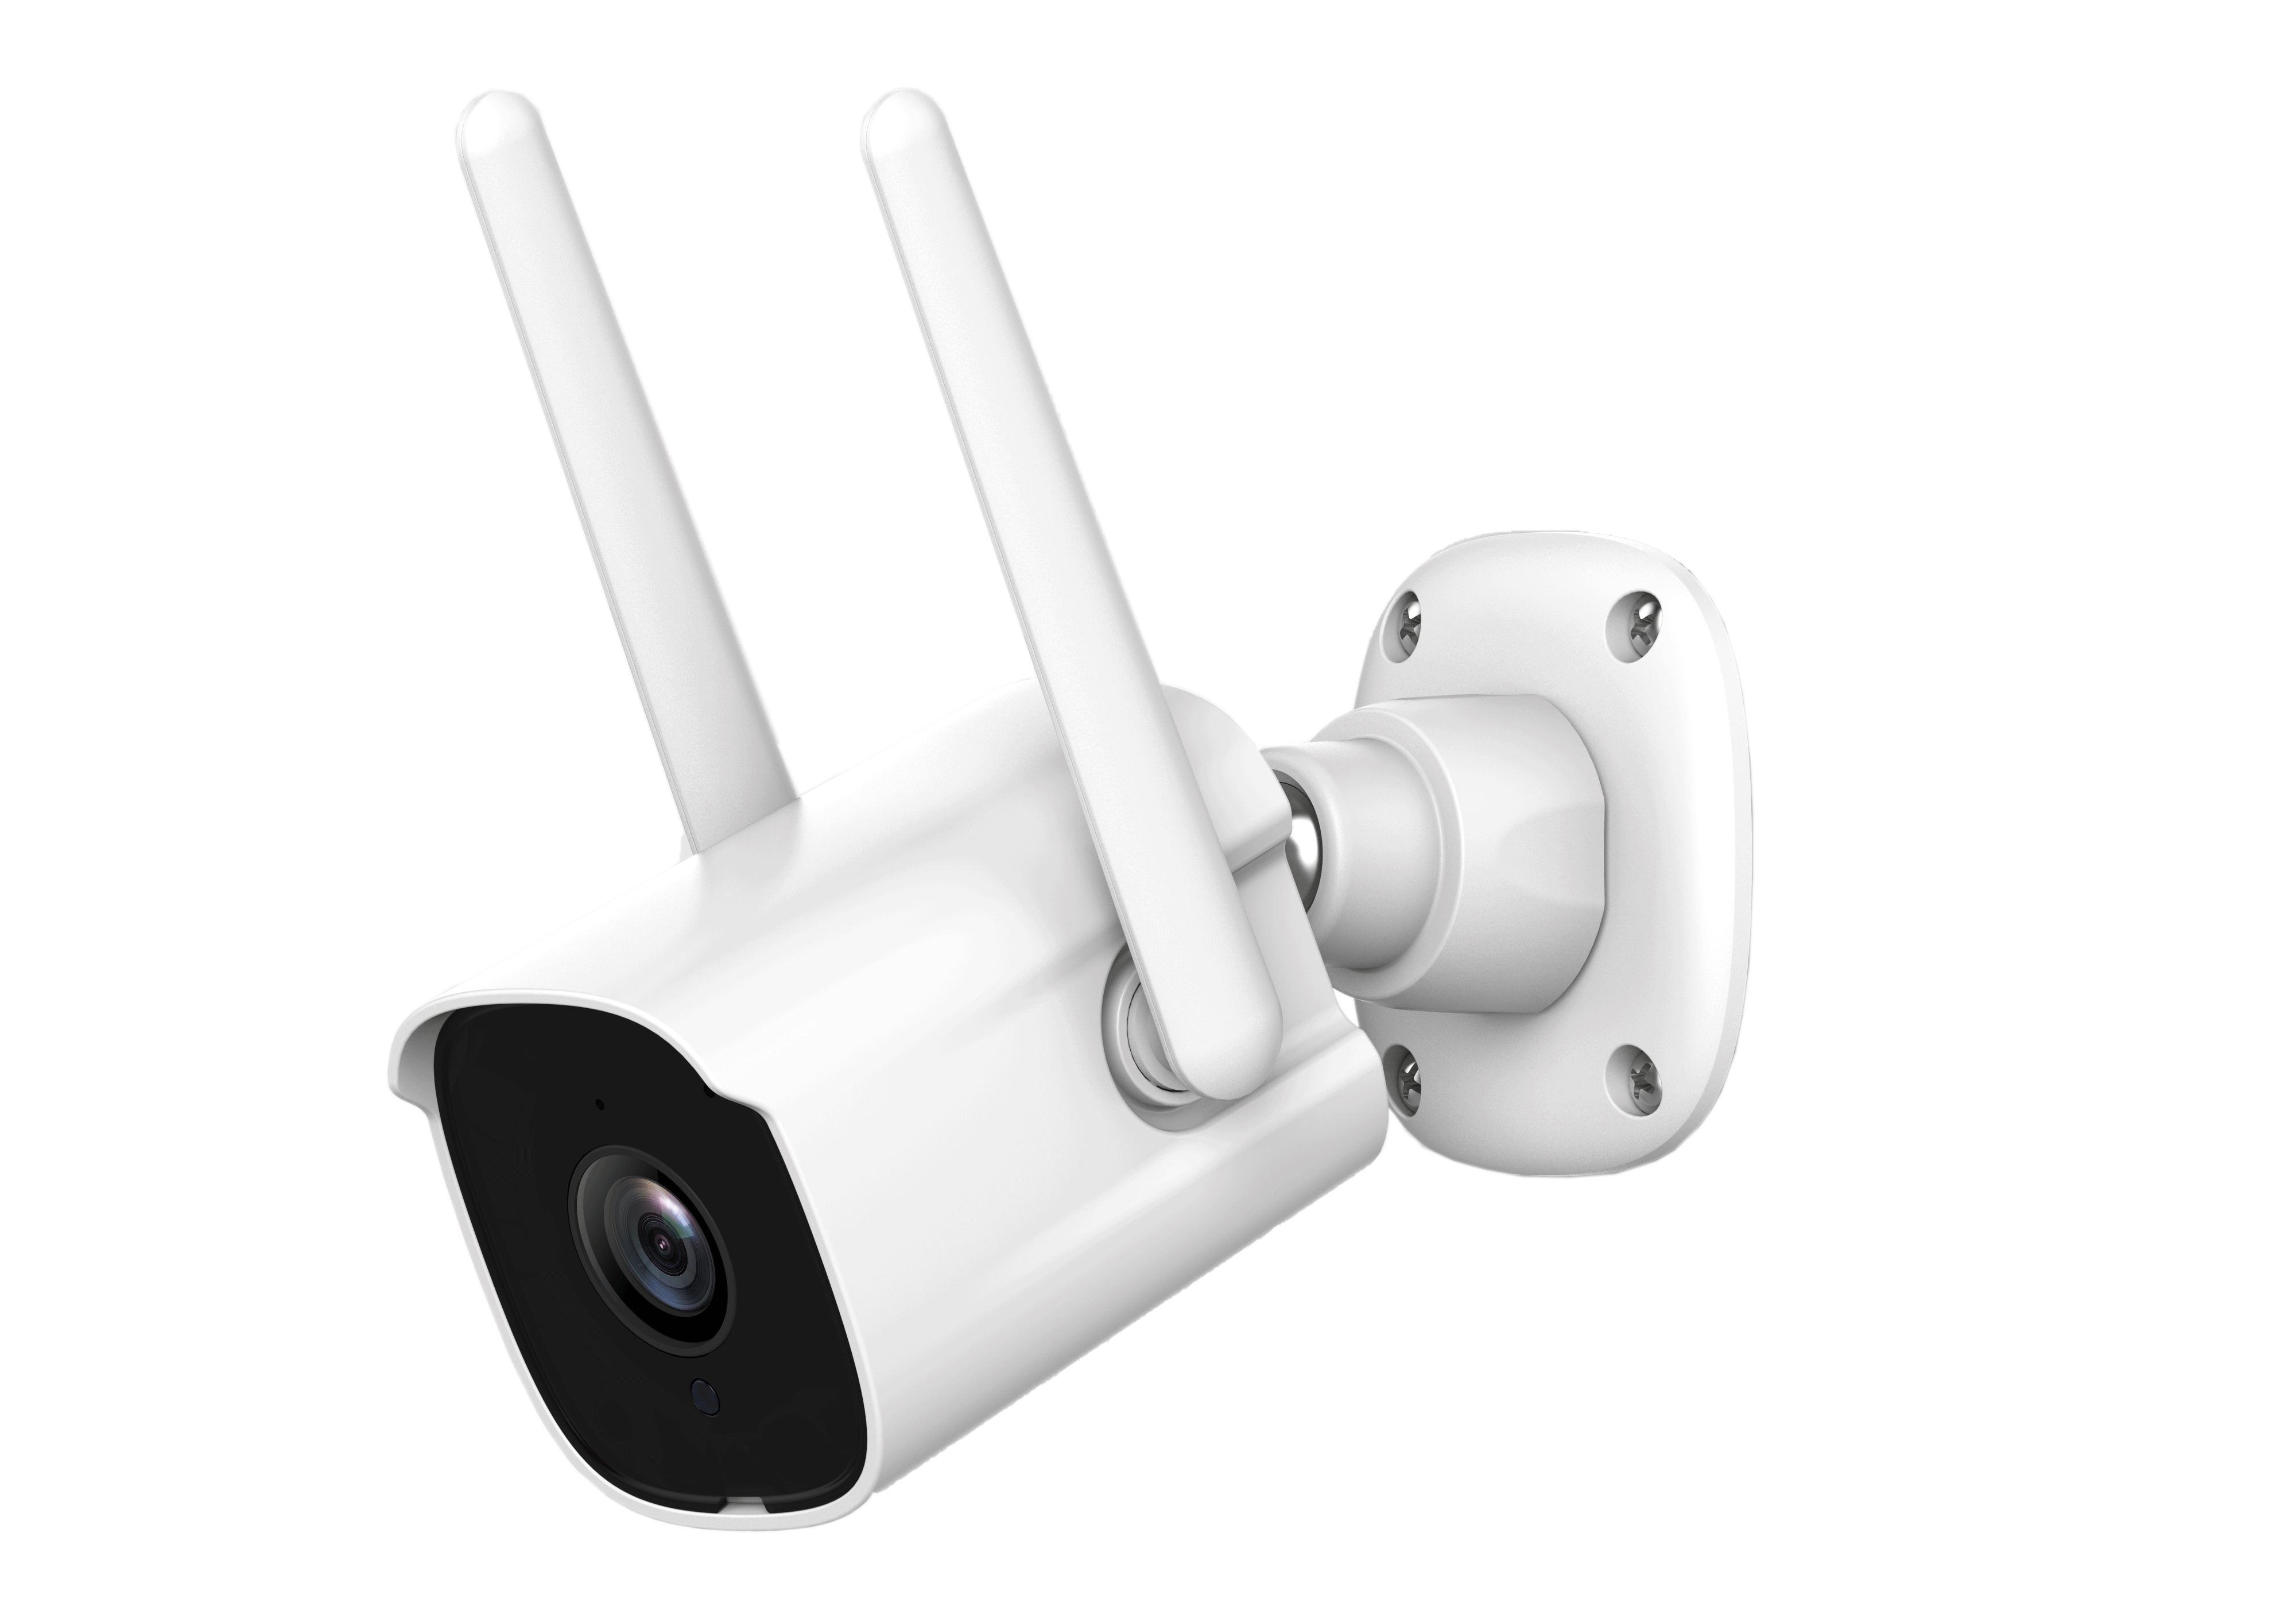 How to connect webcam surveillance?